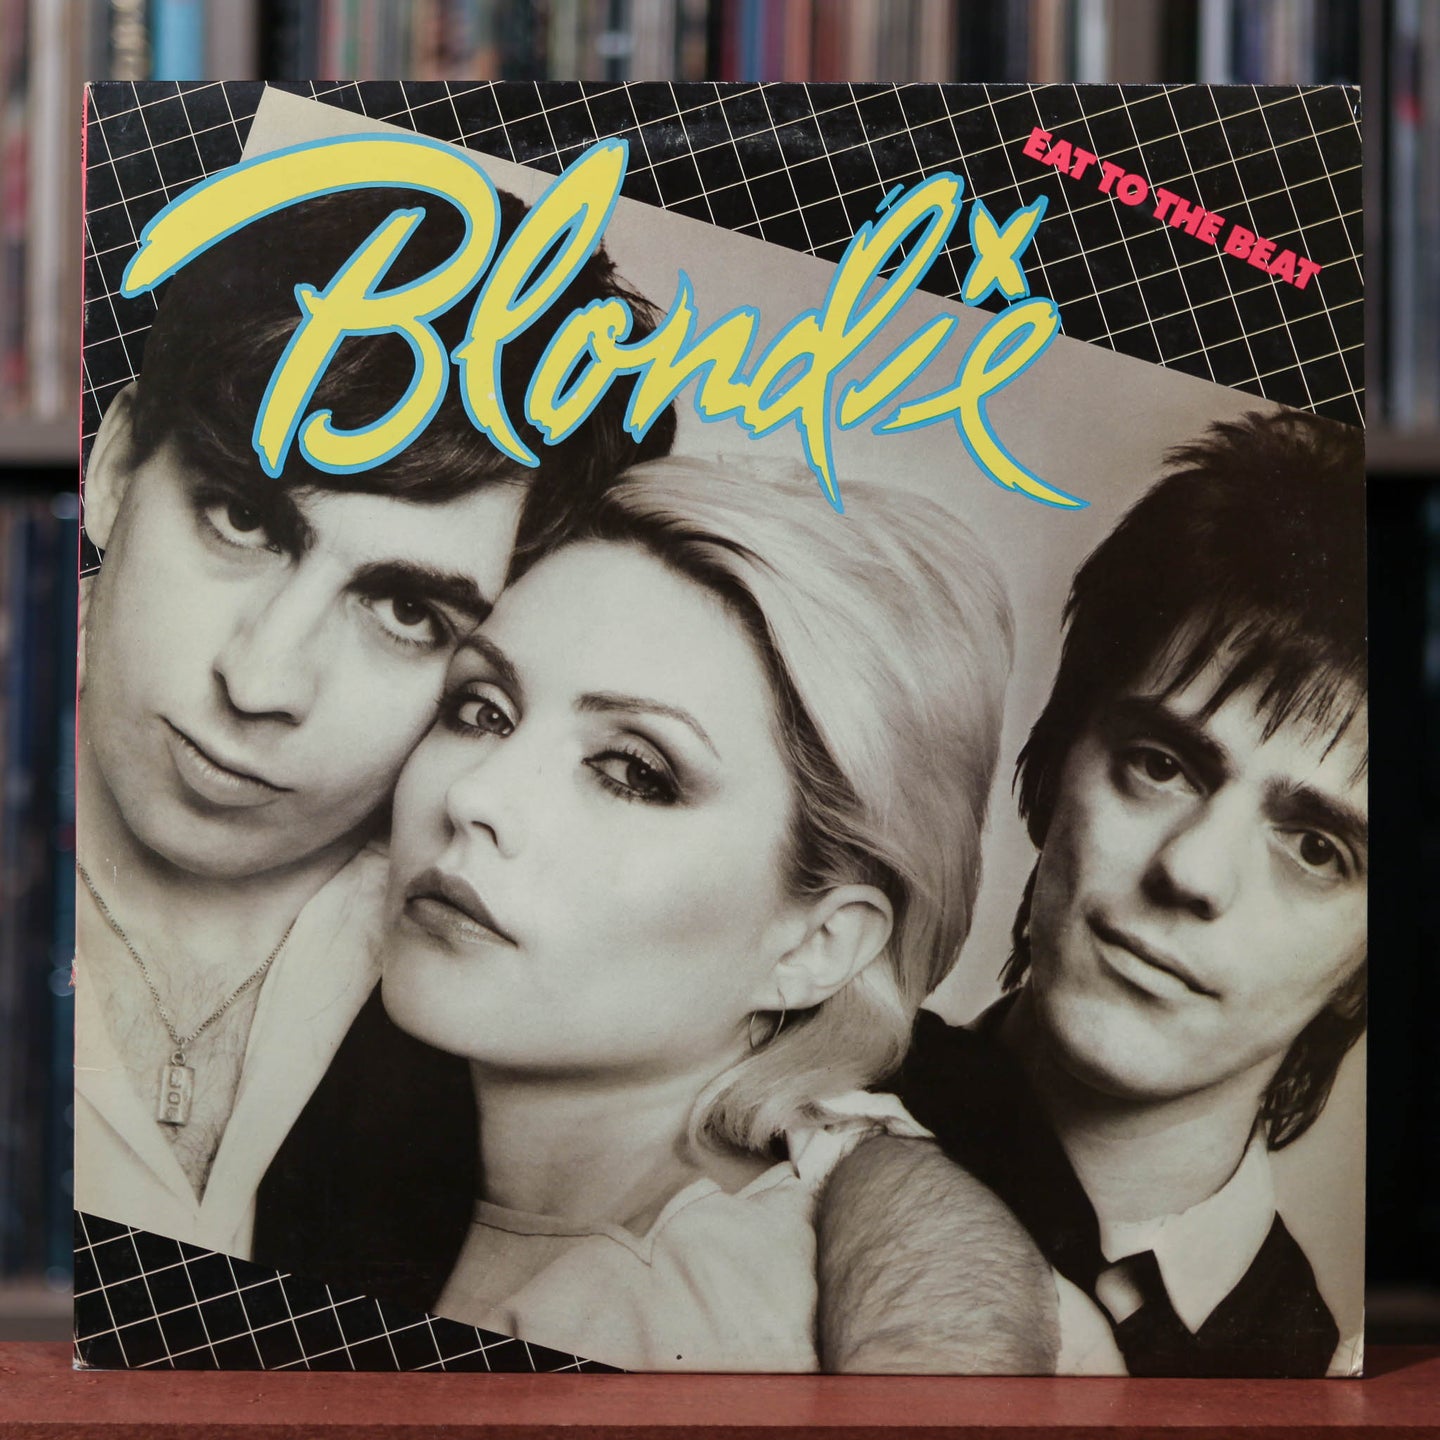 Blondie - Eat To The Beat - 1979 Chrysalis - VG+/VG+